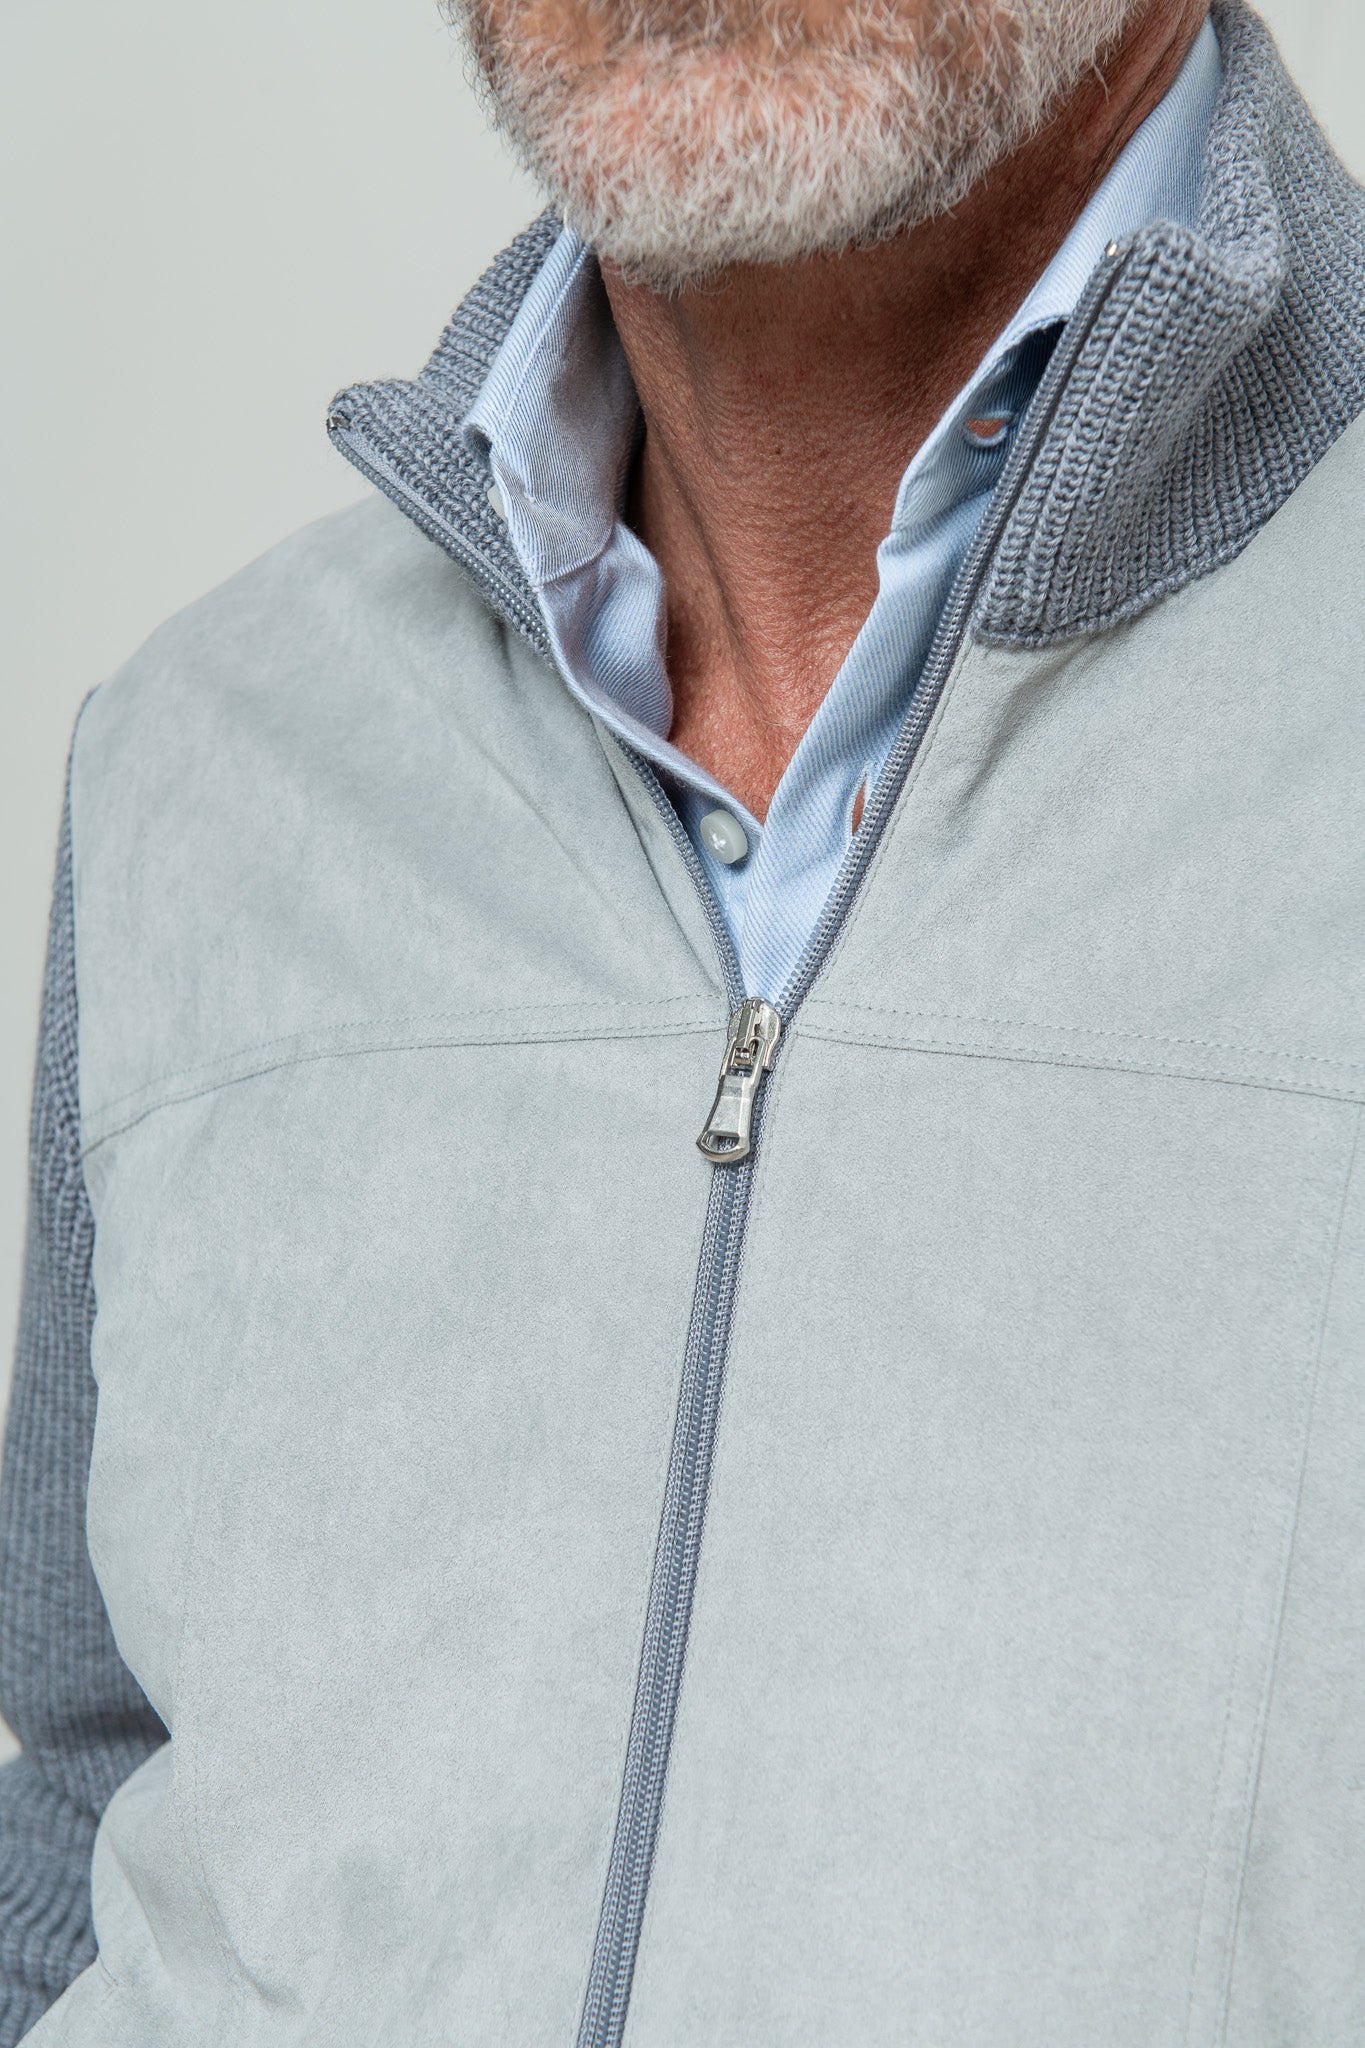 Grey and light grey cardigan - Alcantara & wool - Made in Italy